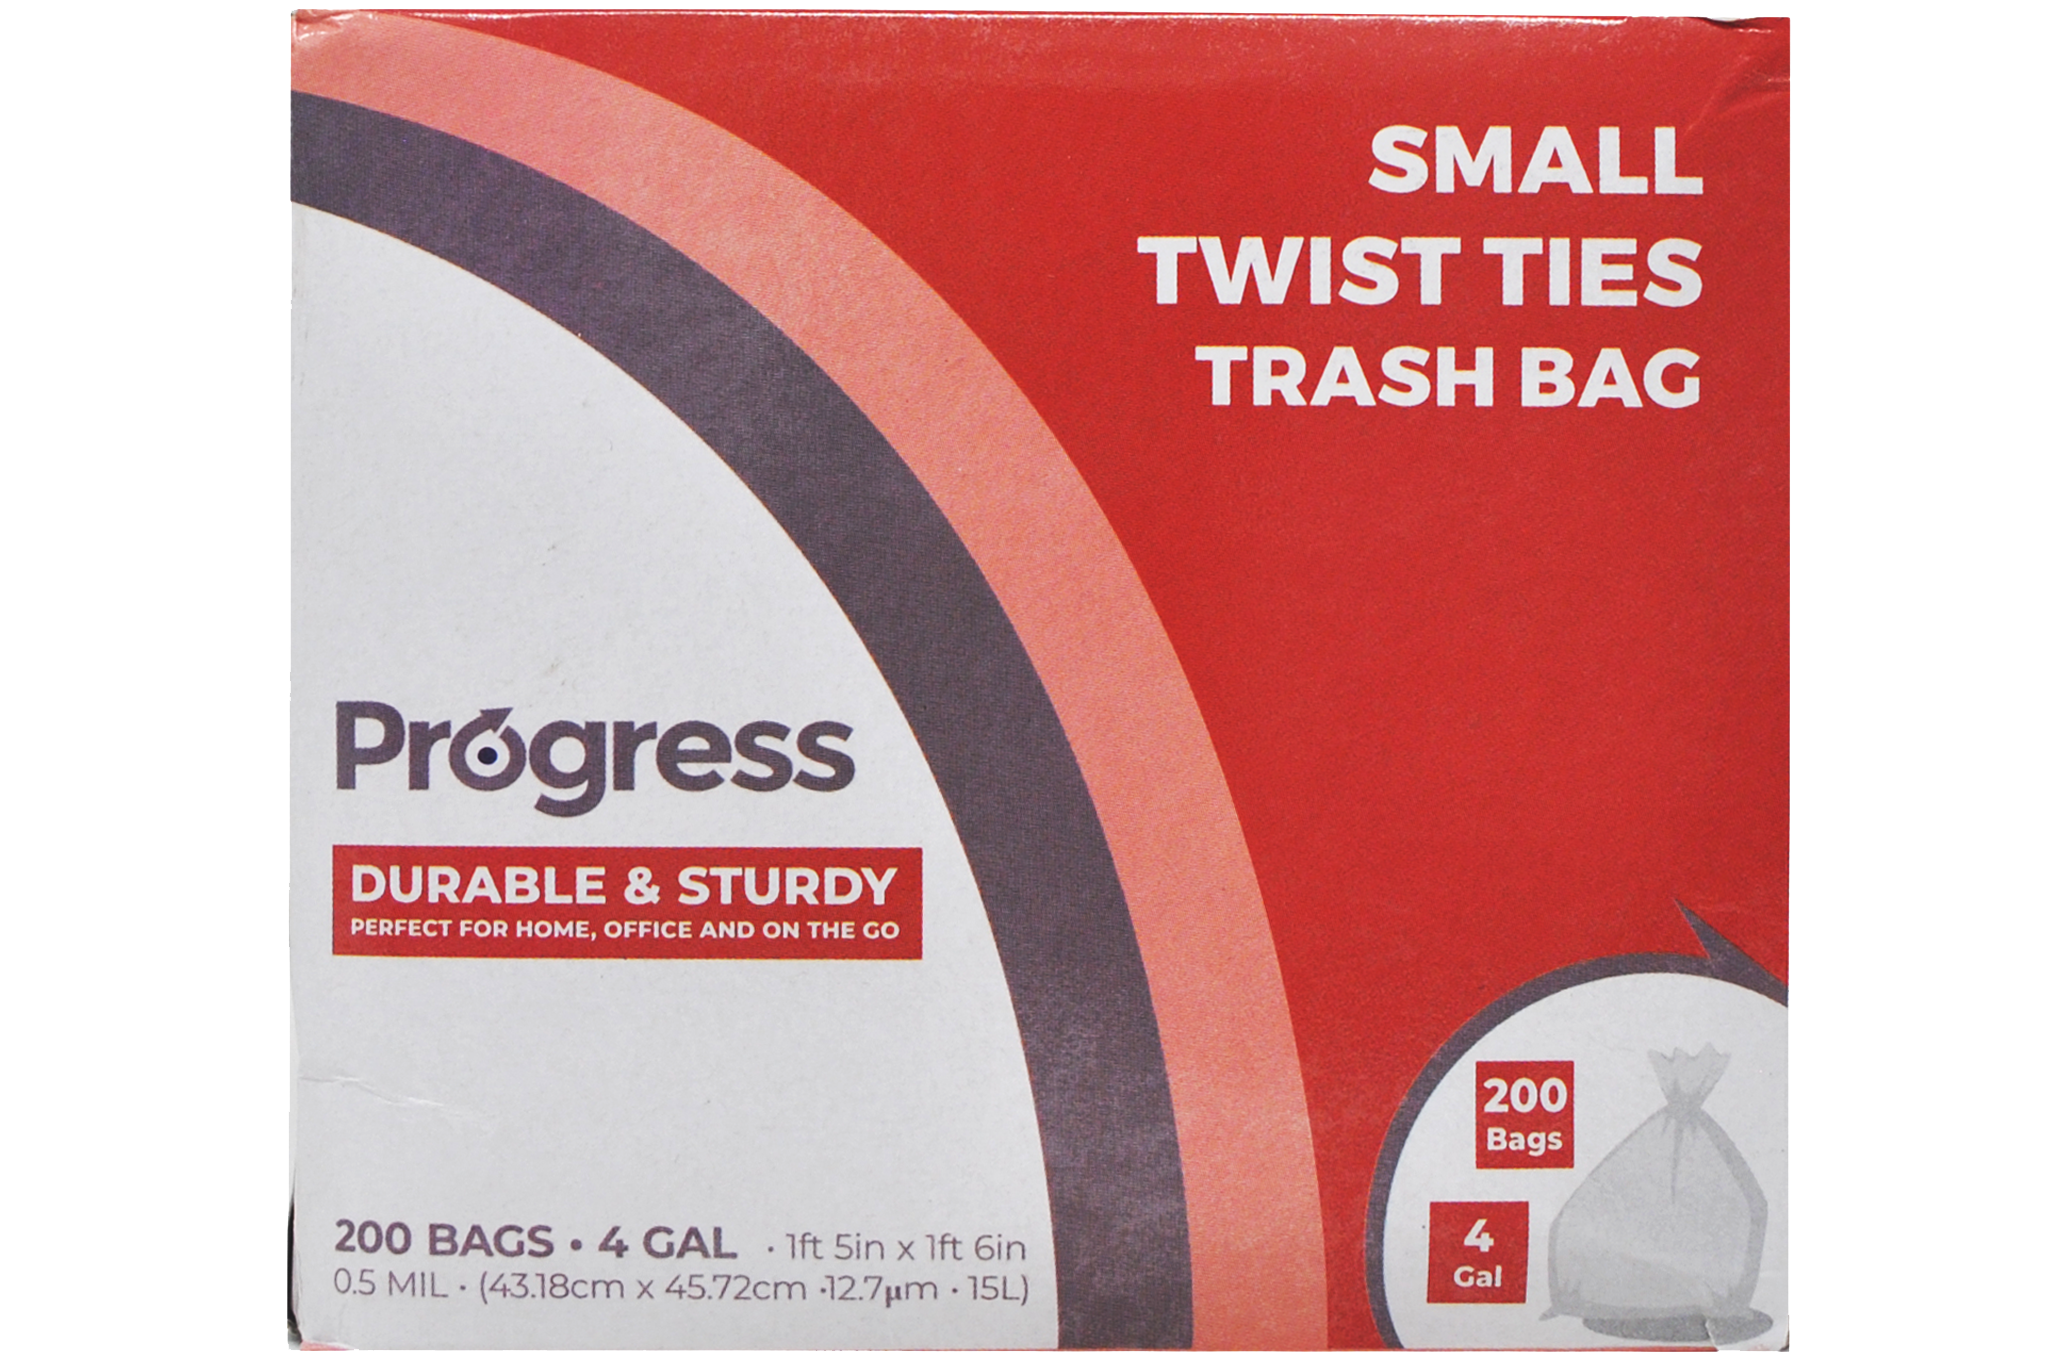 Glad Trash Bags, Twist-Tie, Small, 4 Gallon